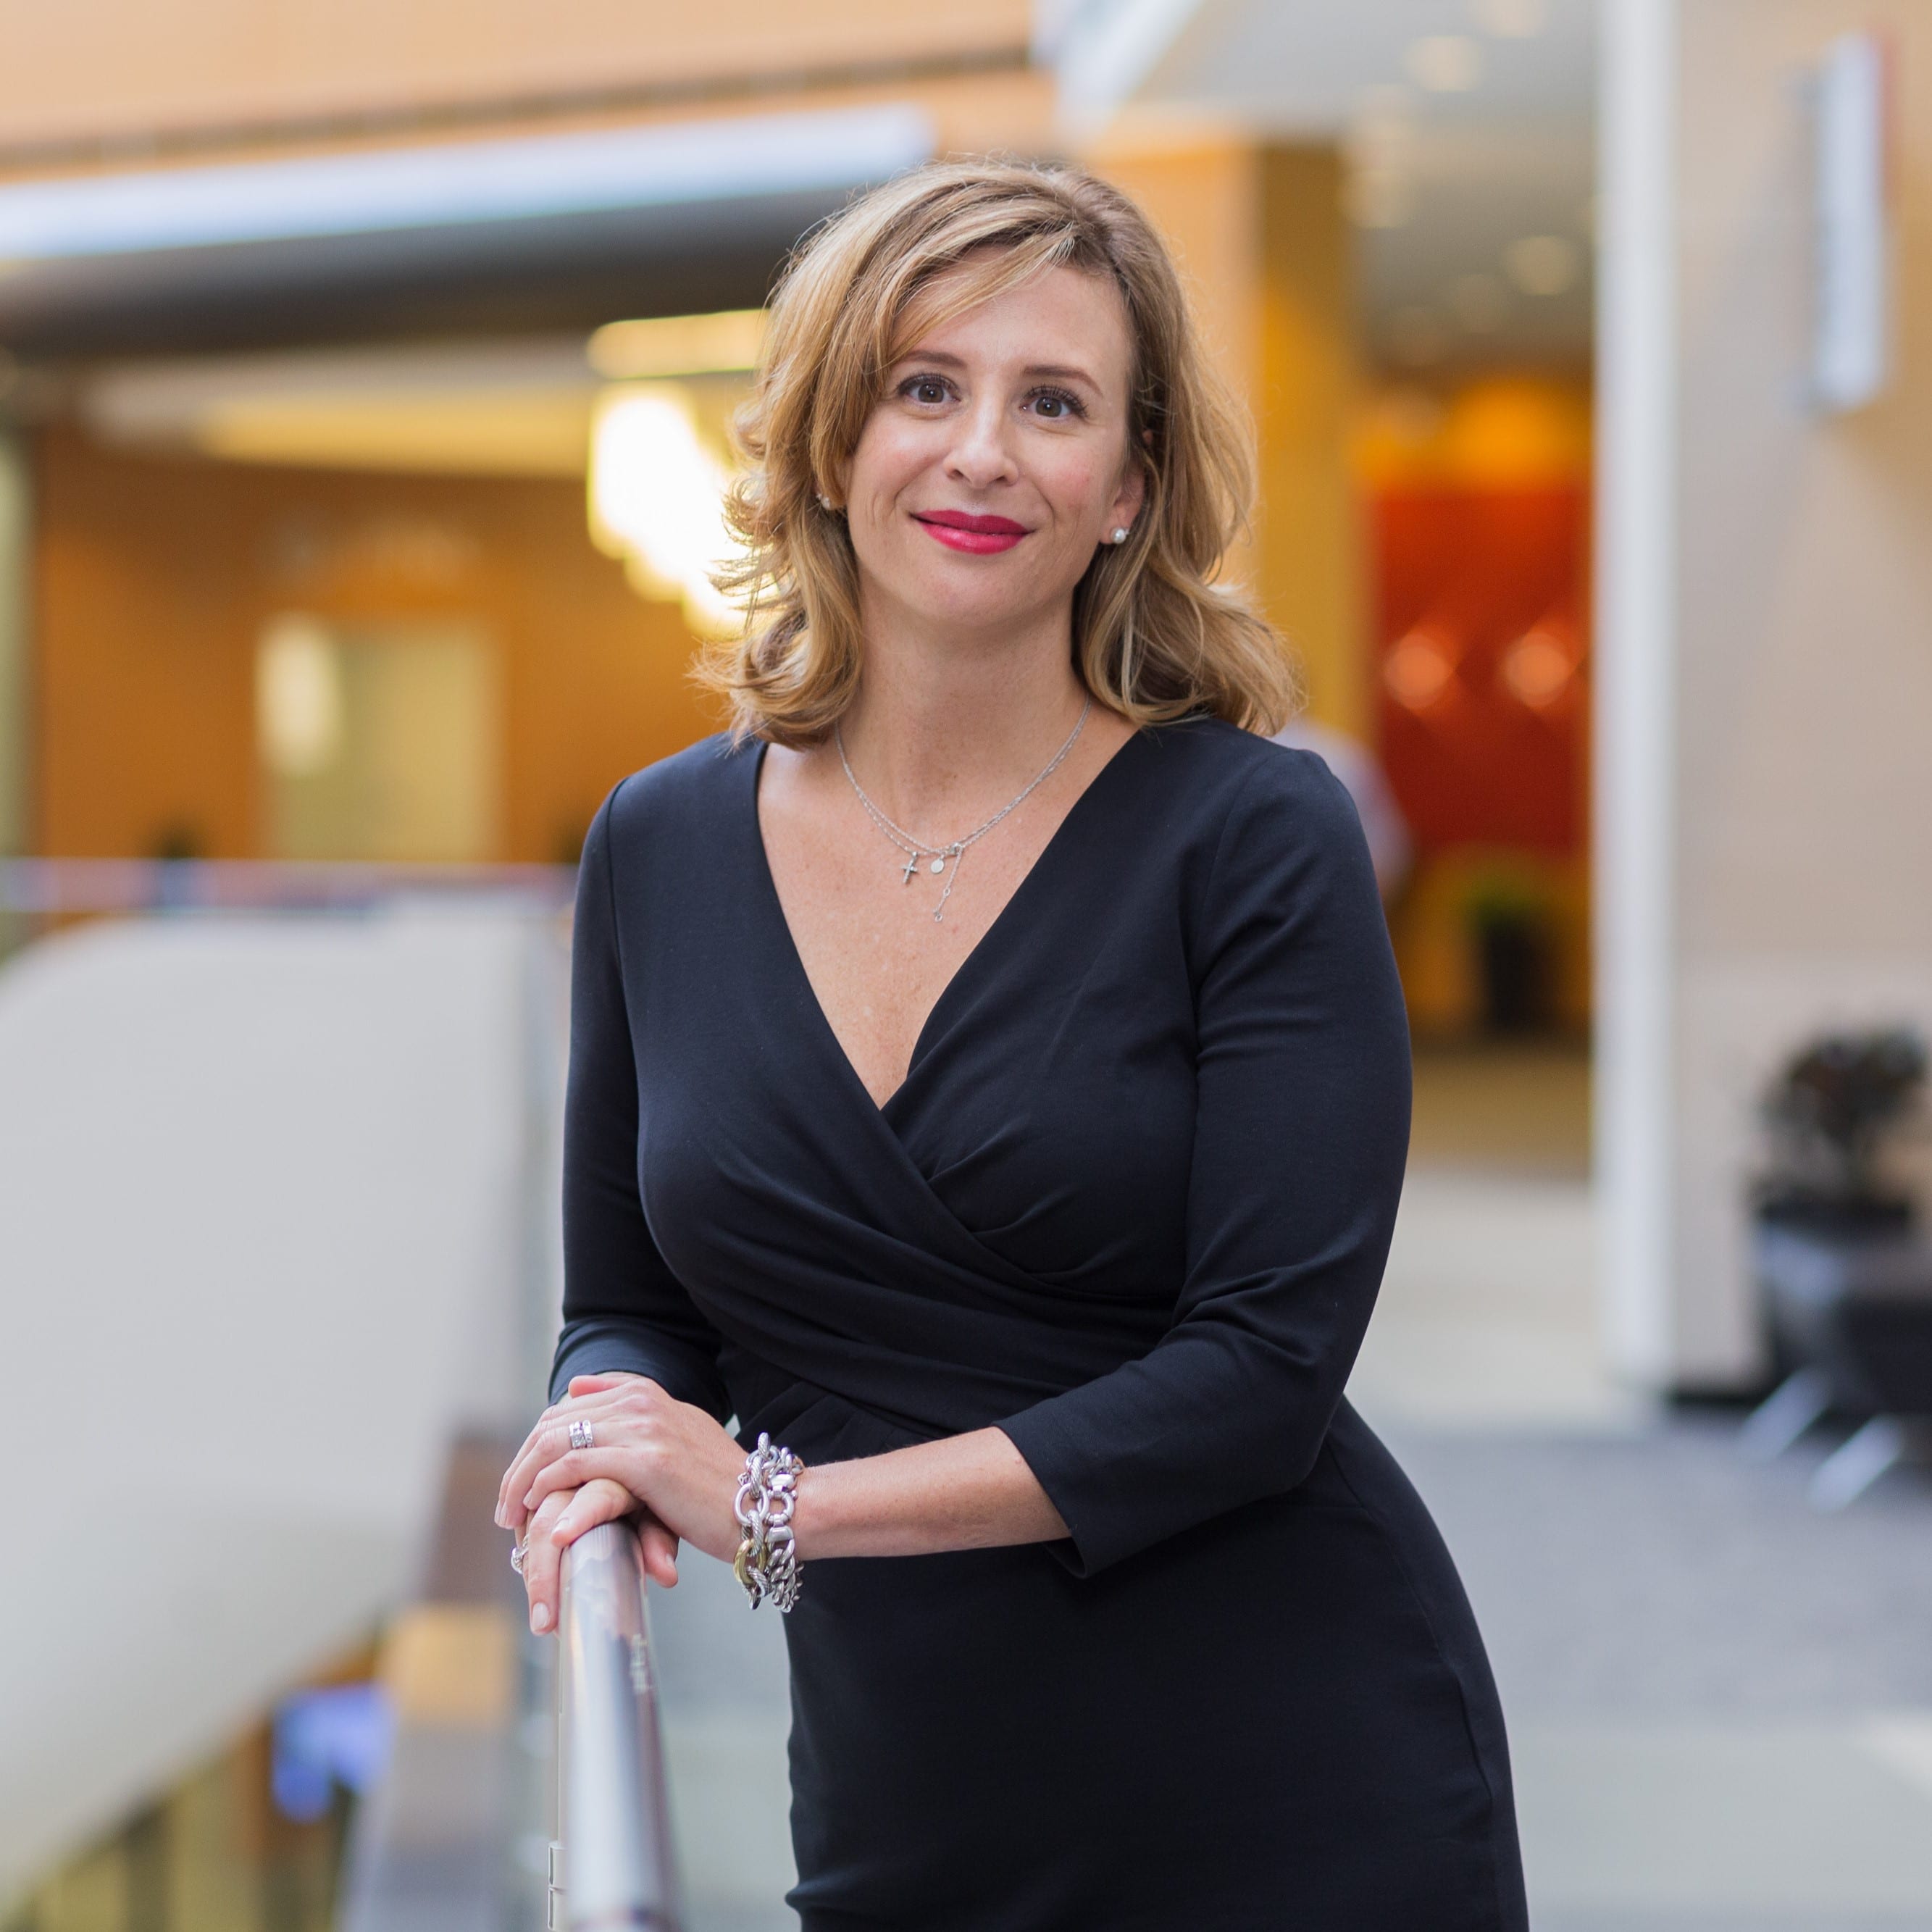 SPEA alumni Angie Carr Klitzsch now serves as CEO of EmployIndy